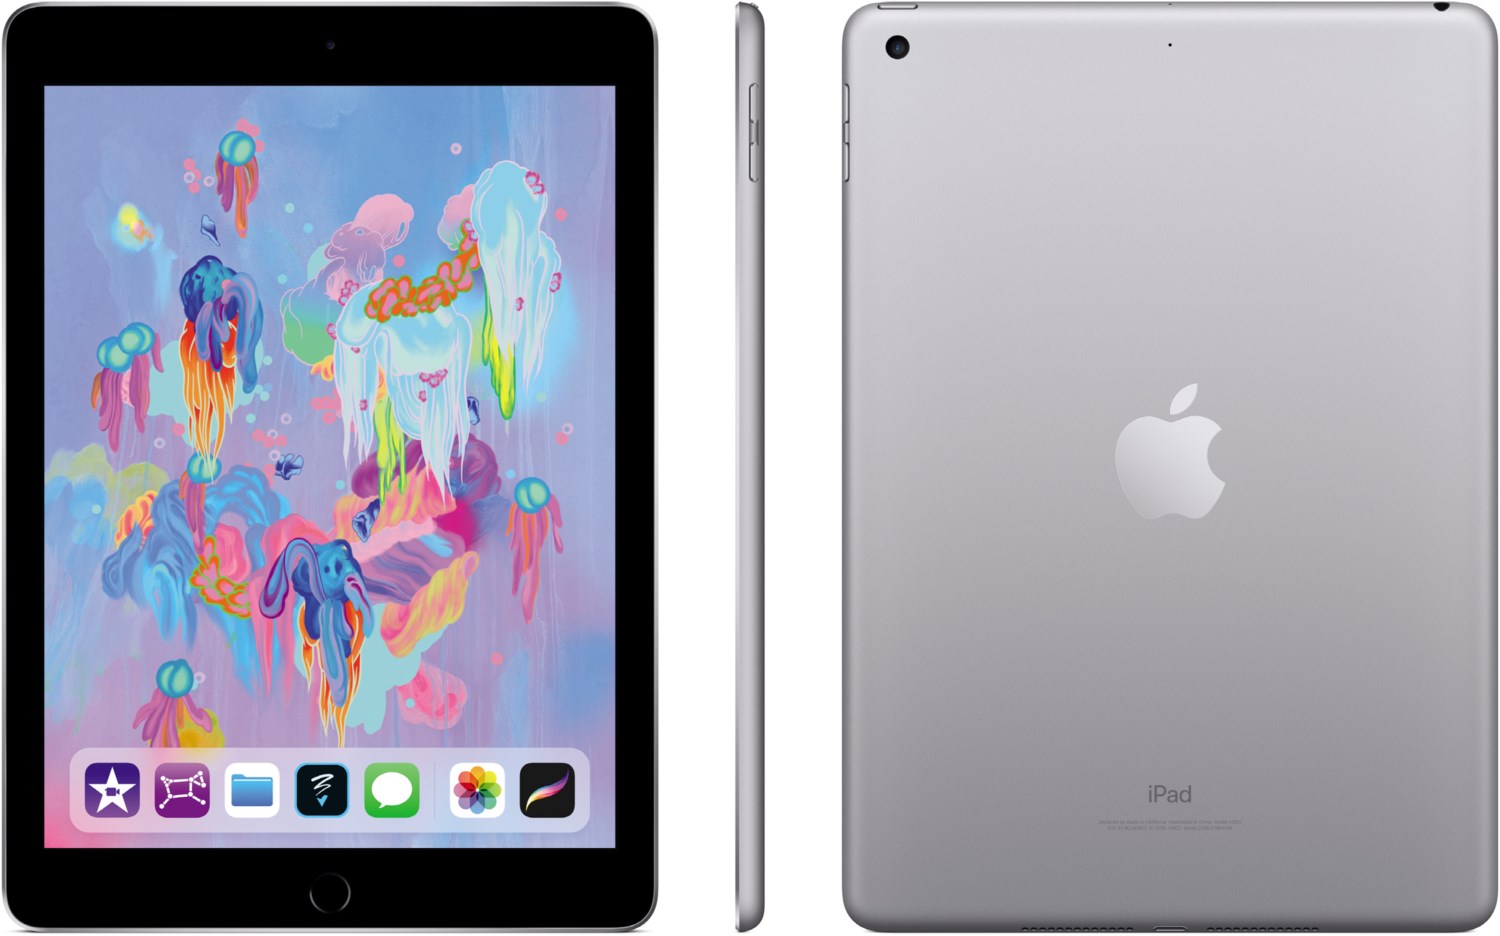 iPad (32GB) WiFi 6.Generation (2018) spacegrau von Apple